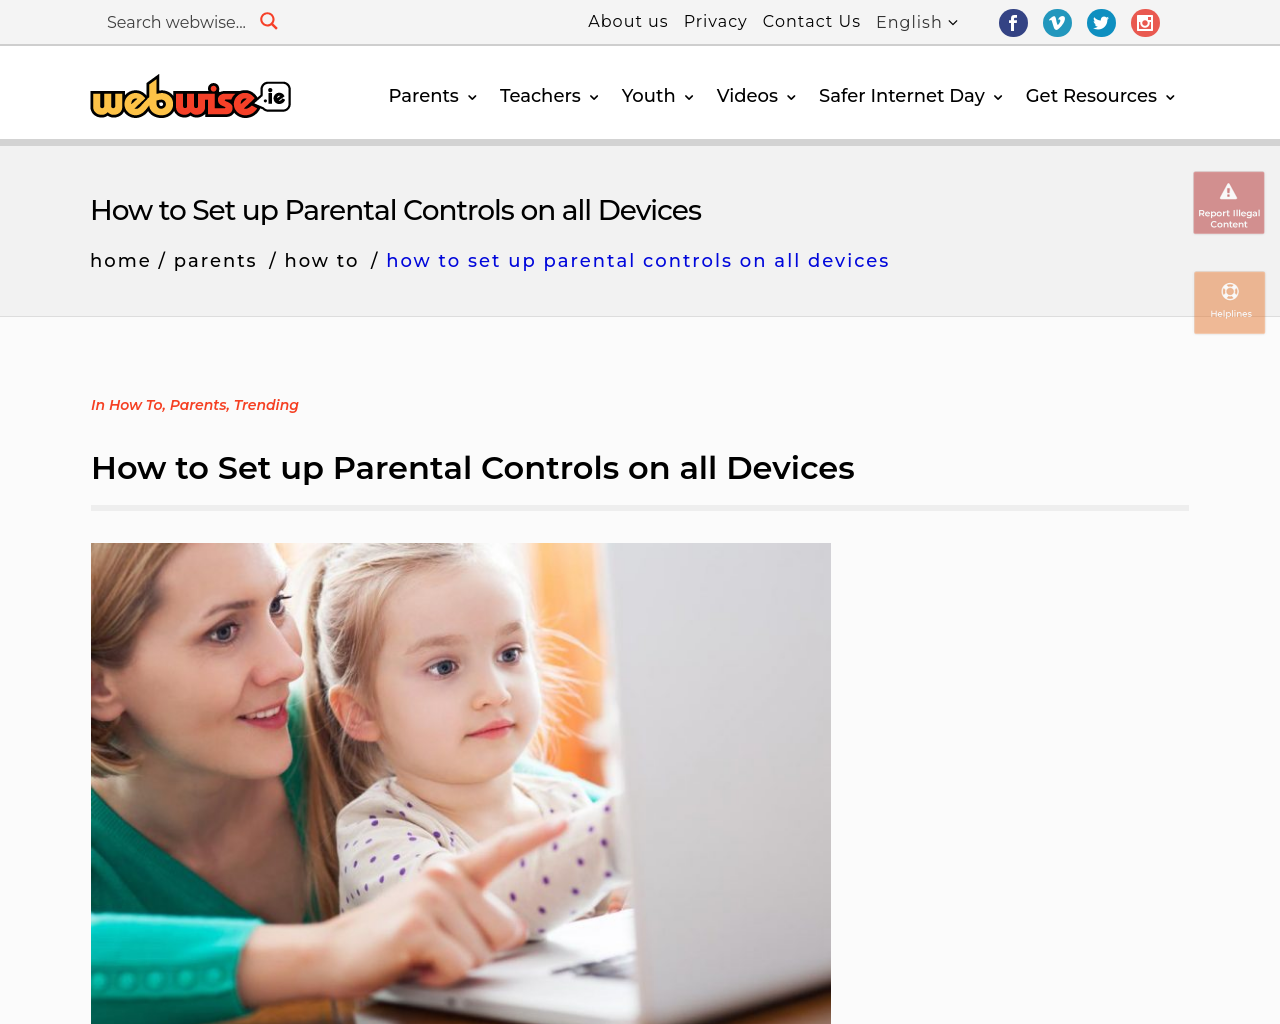 How to set up parental controls